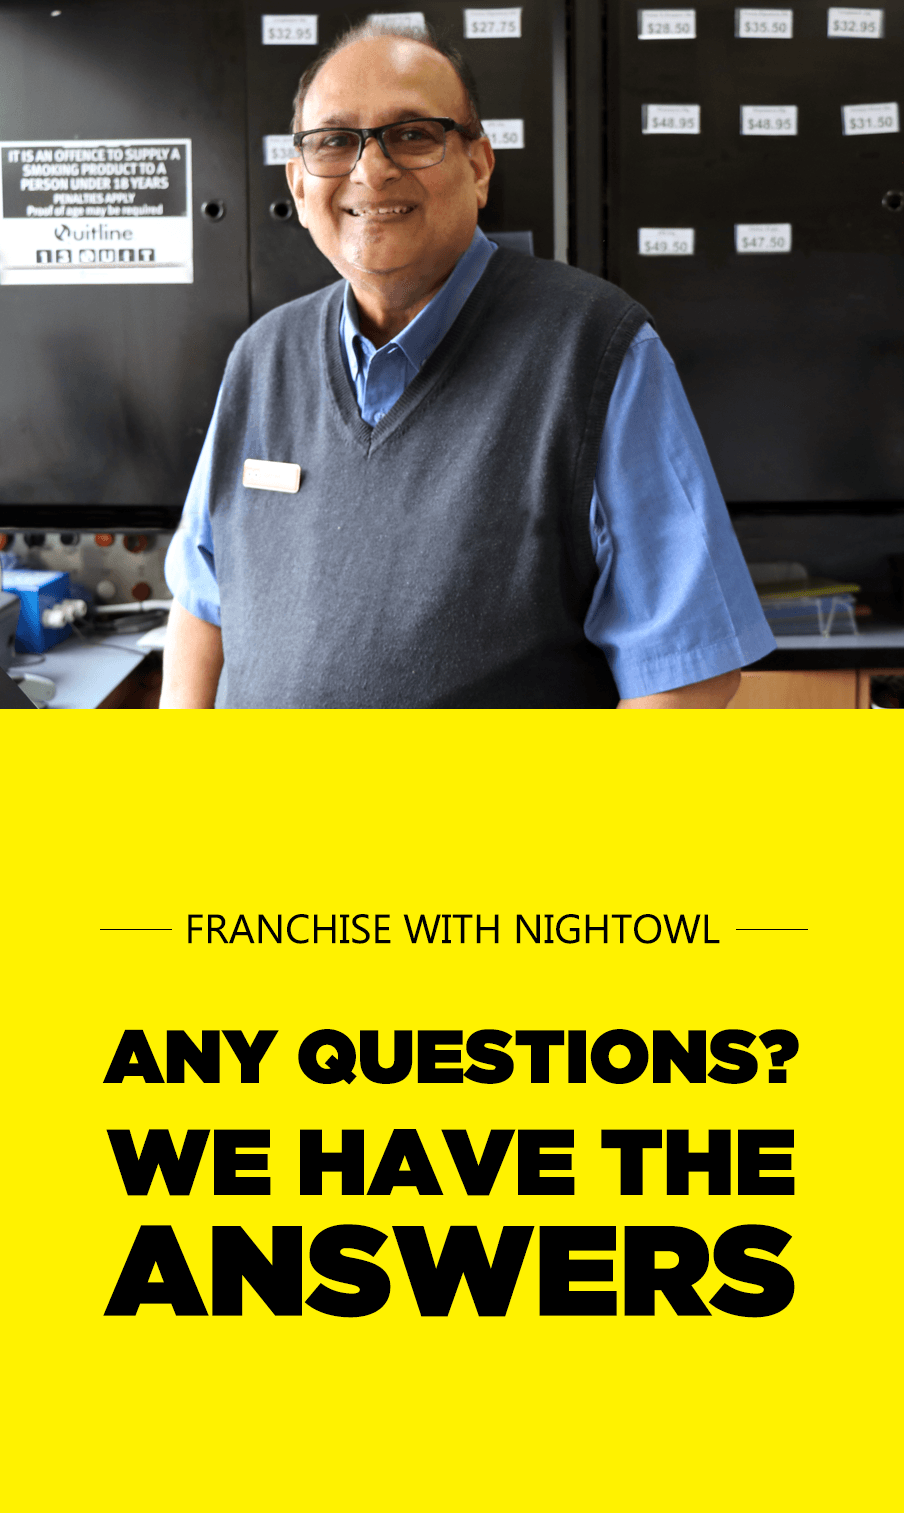 NightOwl franchise owner vertical